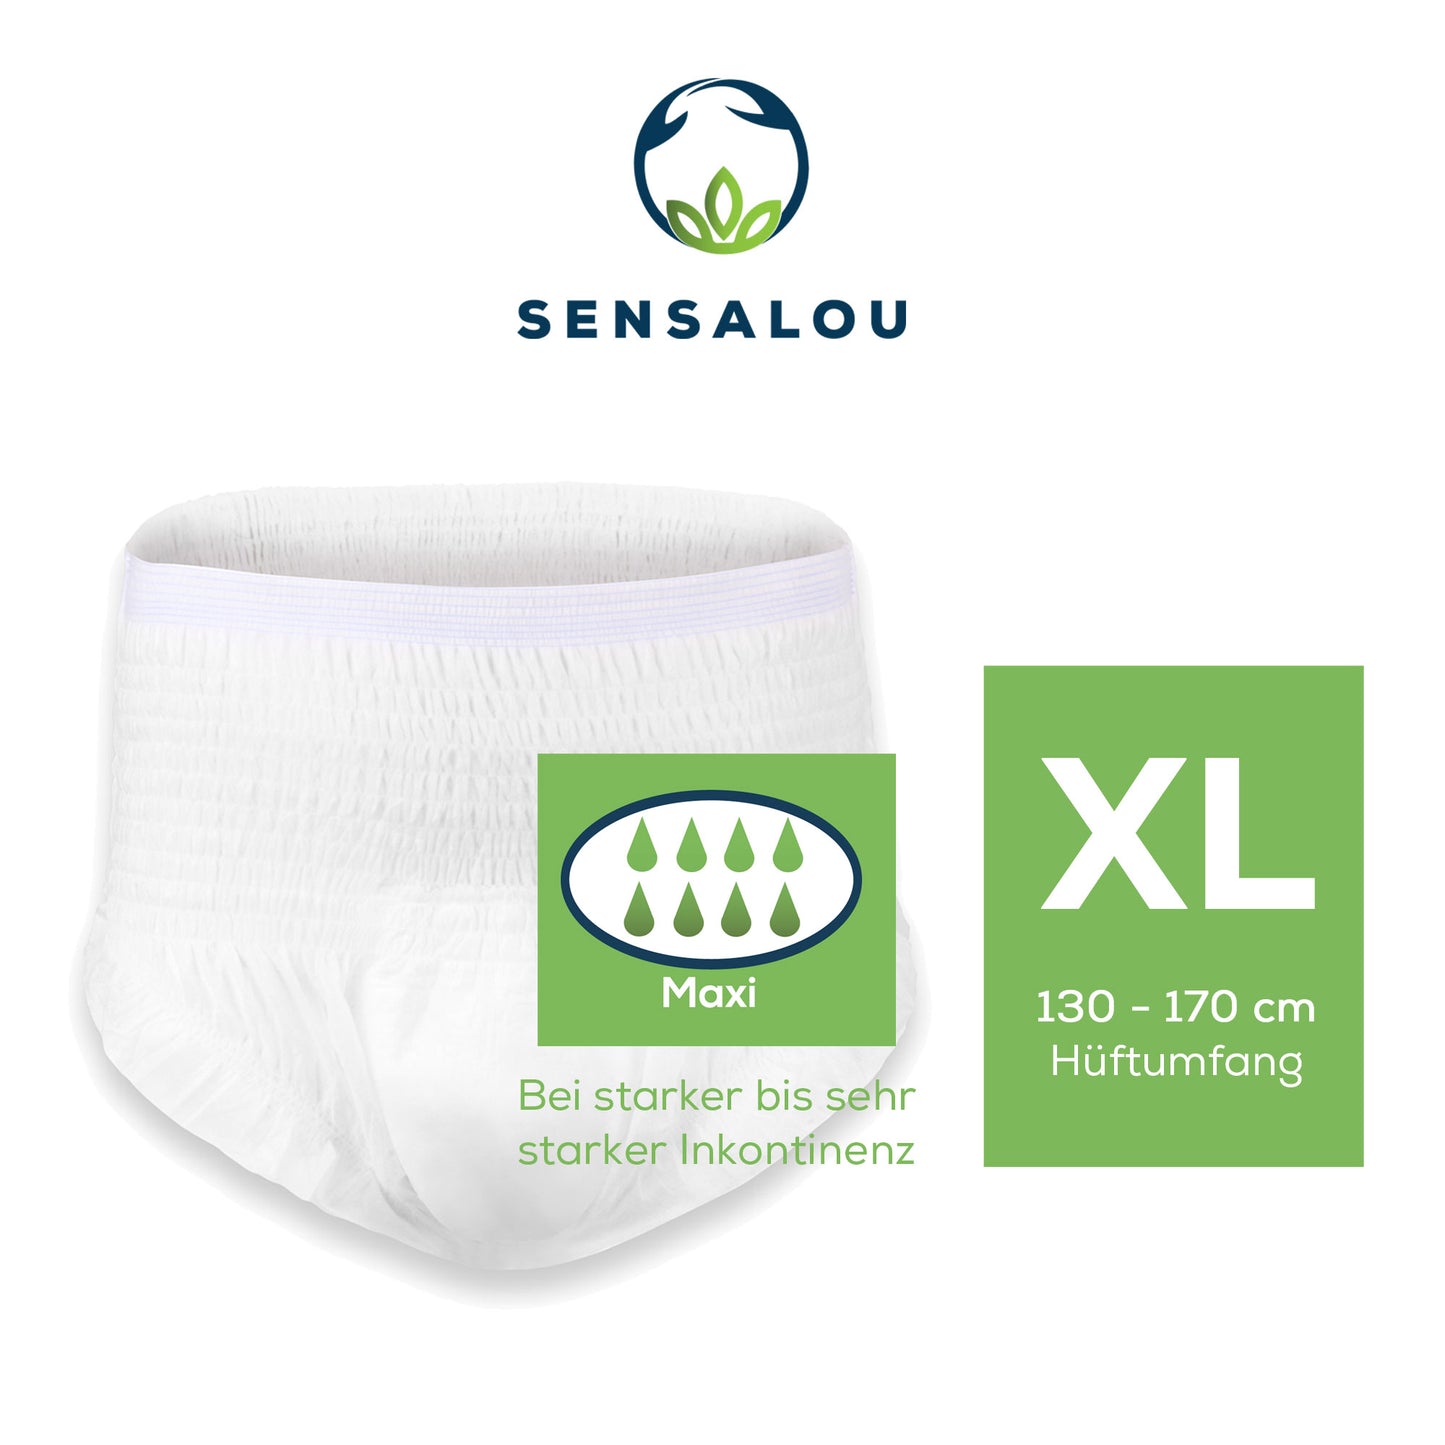 Sensalou diaper pants test package size. M, L, XL